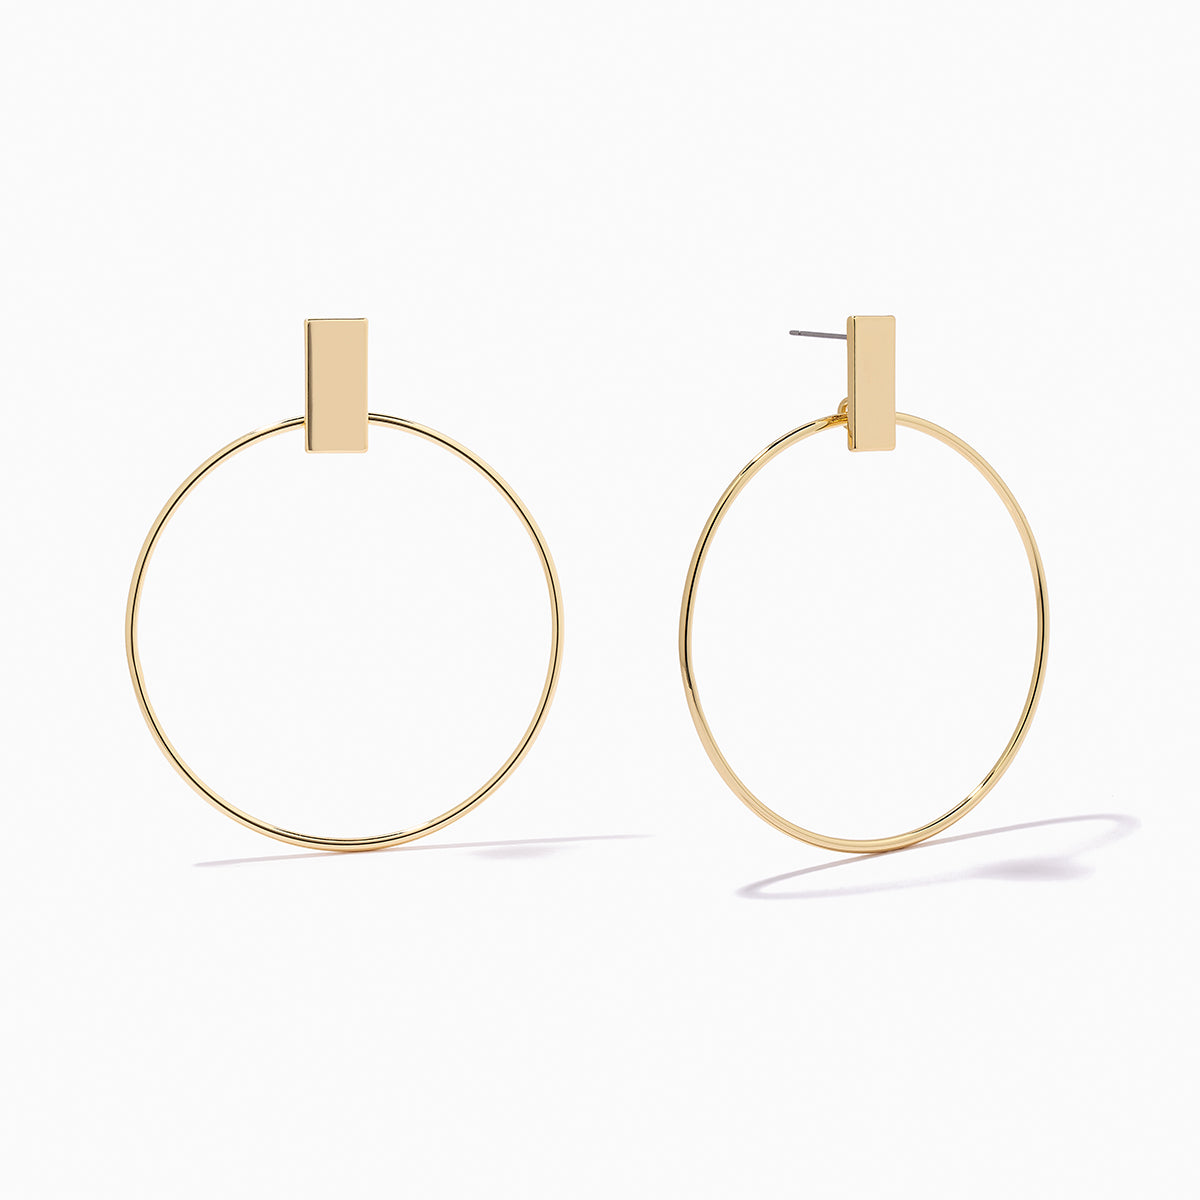 Washington Square Earrings | Gold | Product Image | Uncommon James